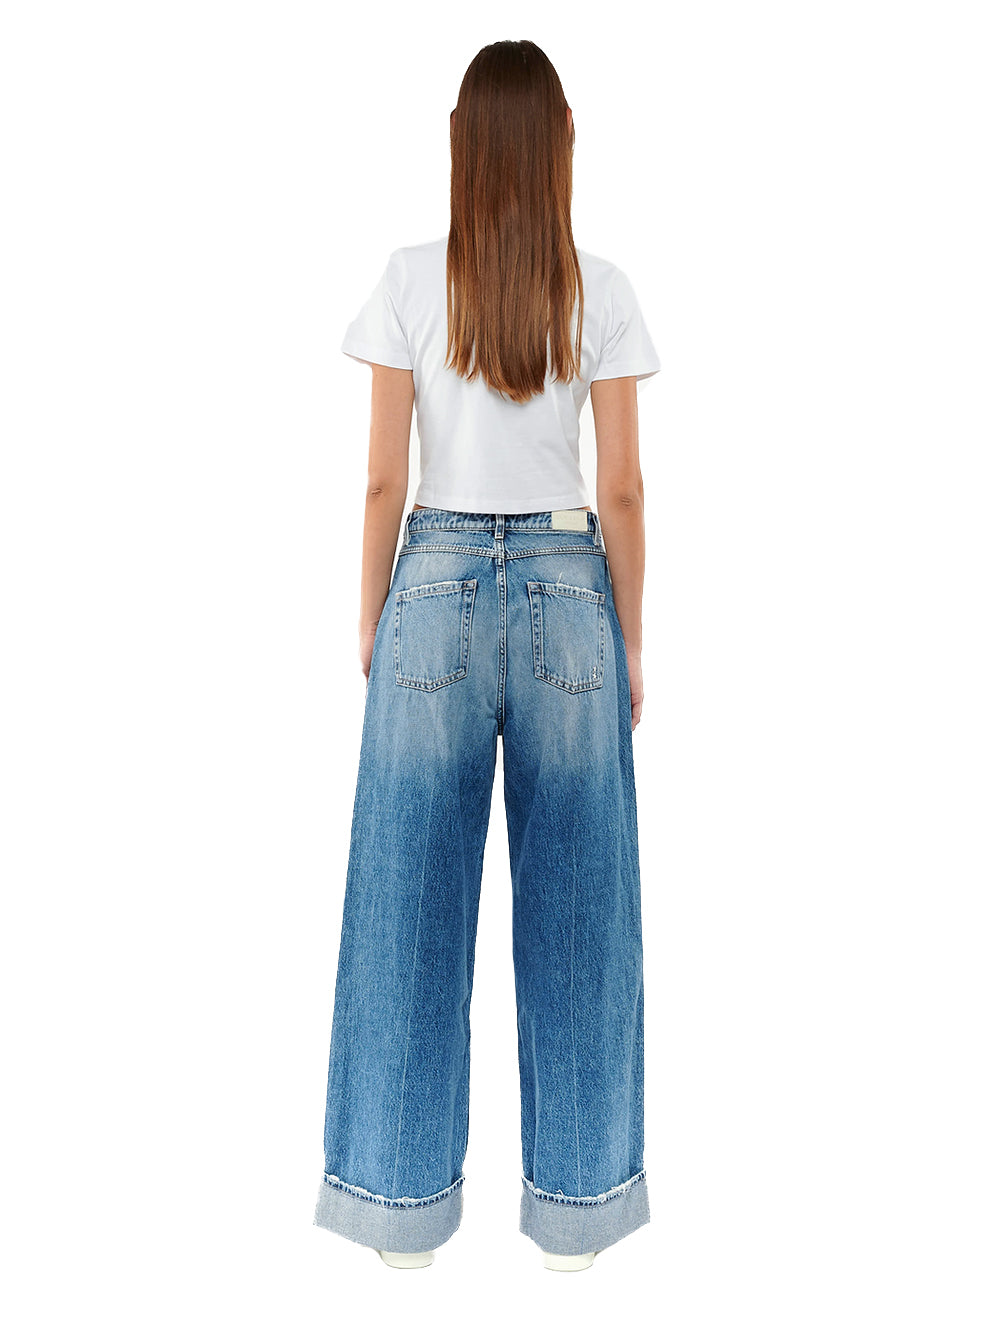 Women's Nicole jeans with turn-up hem